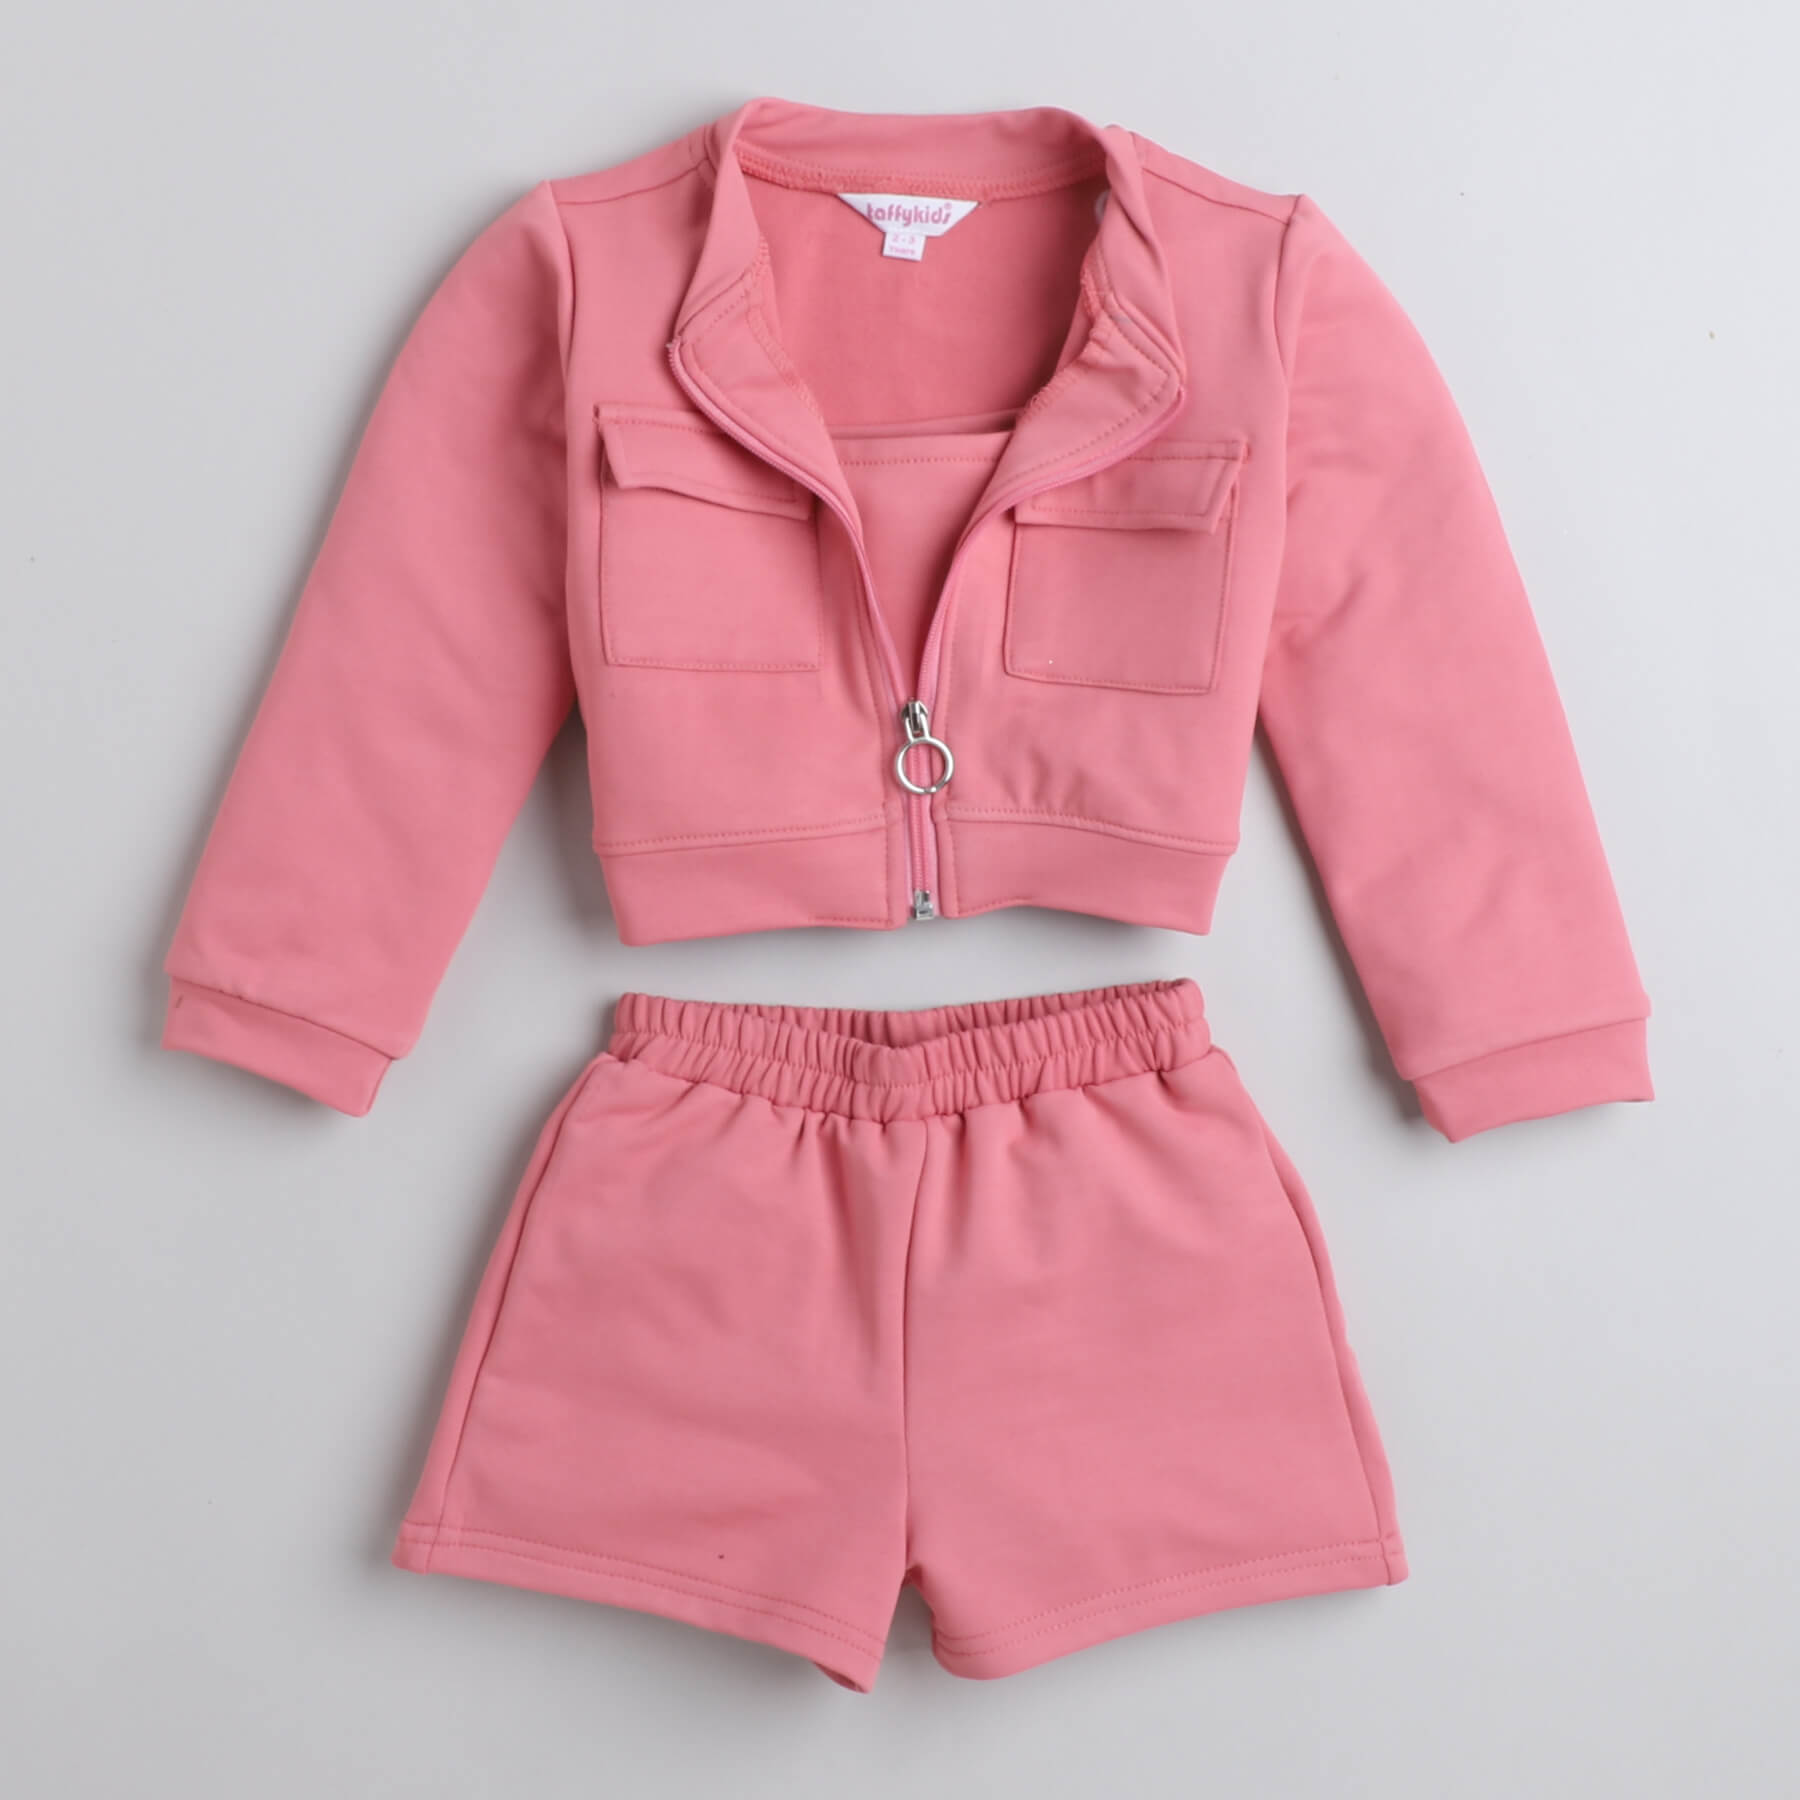 Taffykids singlet crop top and  short set  with zip up jacket-Pink